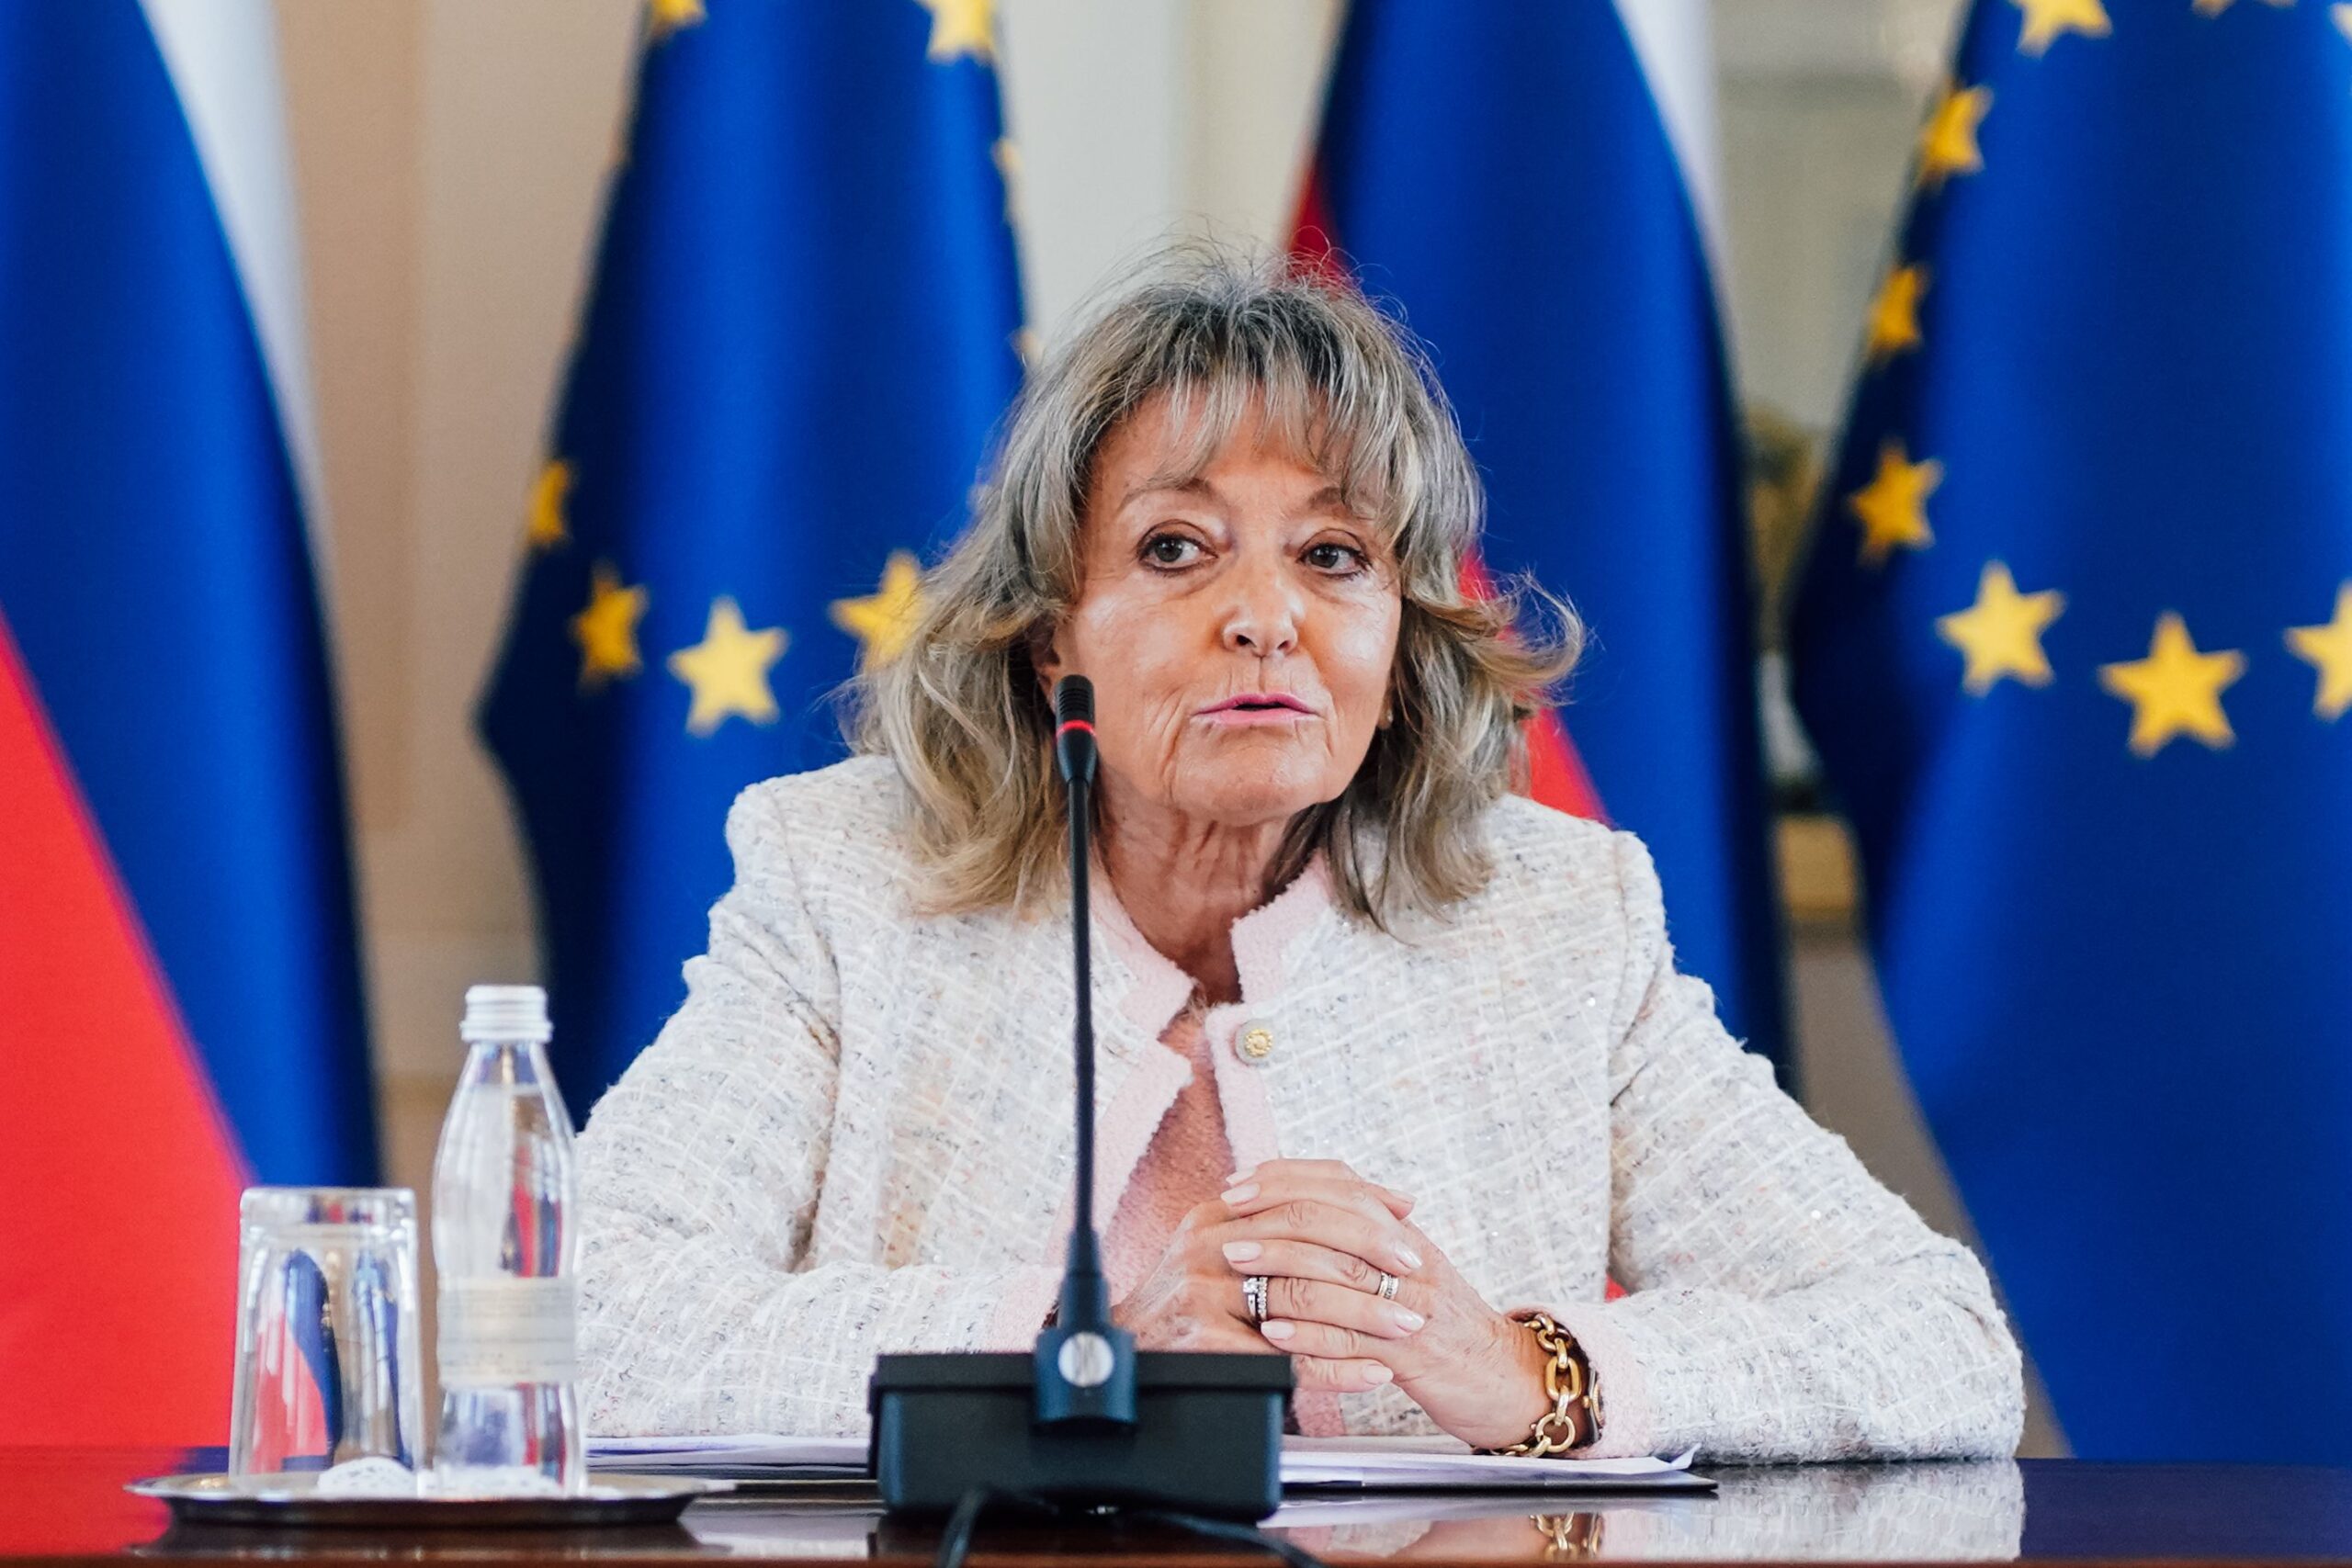 (VIDEO) Kandidatka za ustavno sodnico Barbara Zobec zavrnila medijske zapise, da predstavlja “trdo jedro SDS-a”